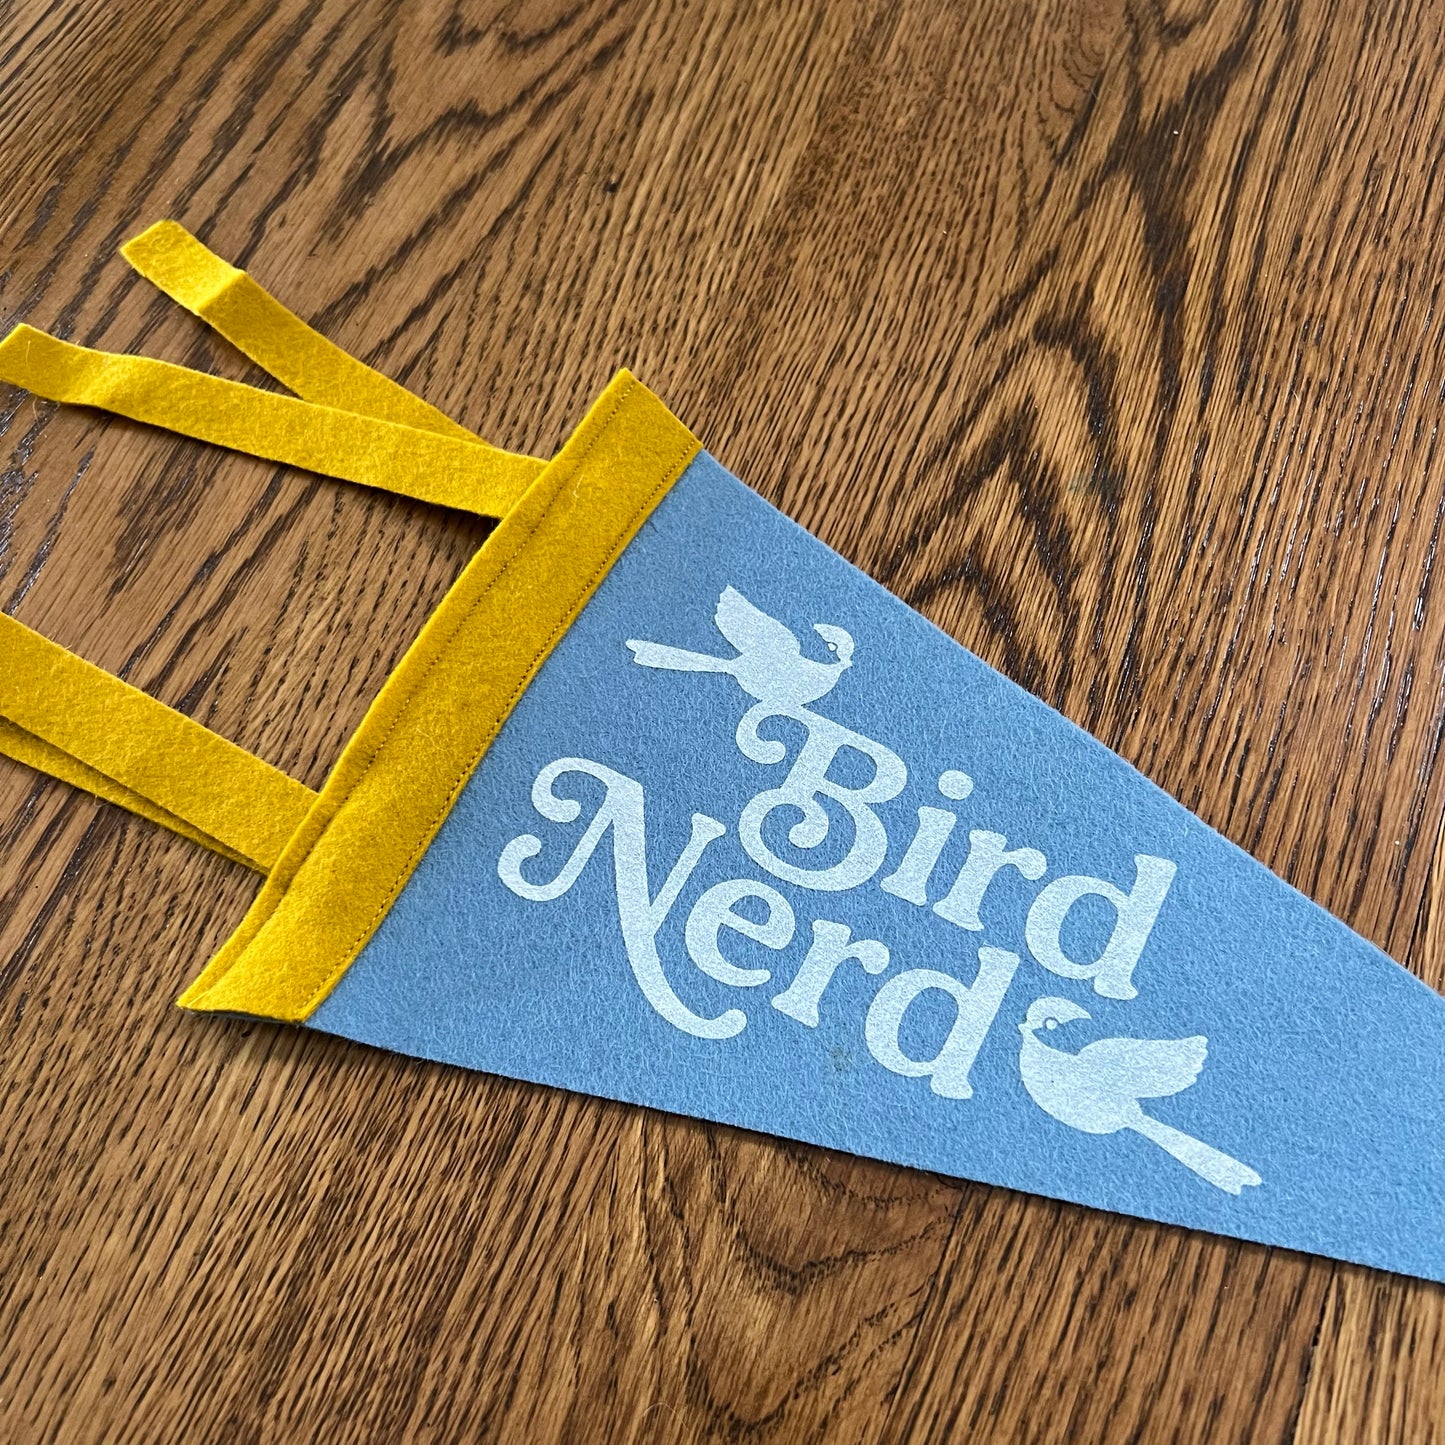 Bird Nerd Felt Pennant - 6x12 inches